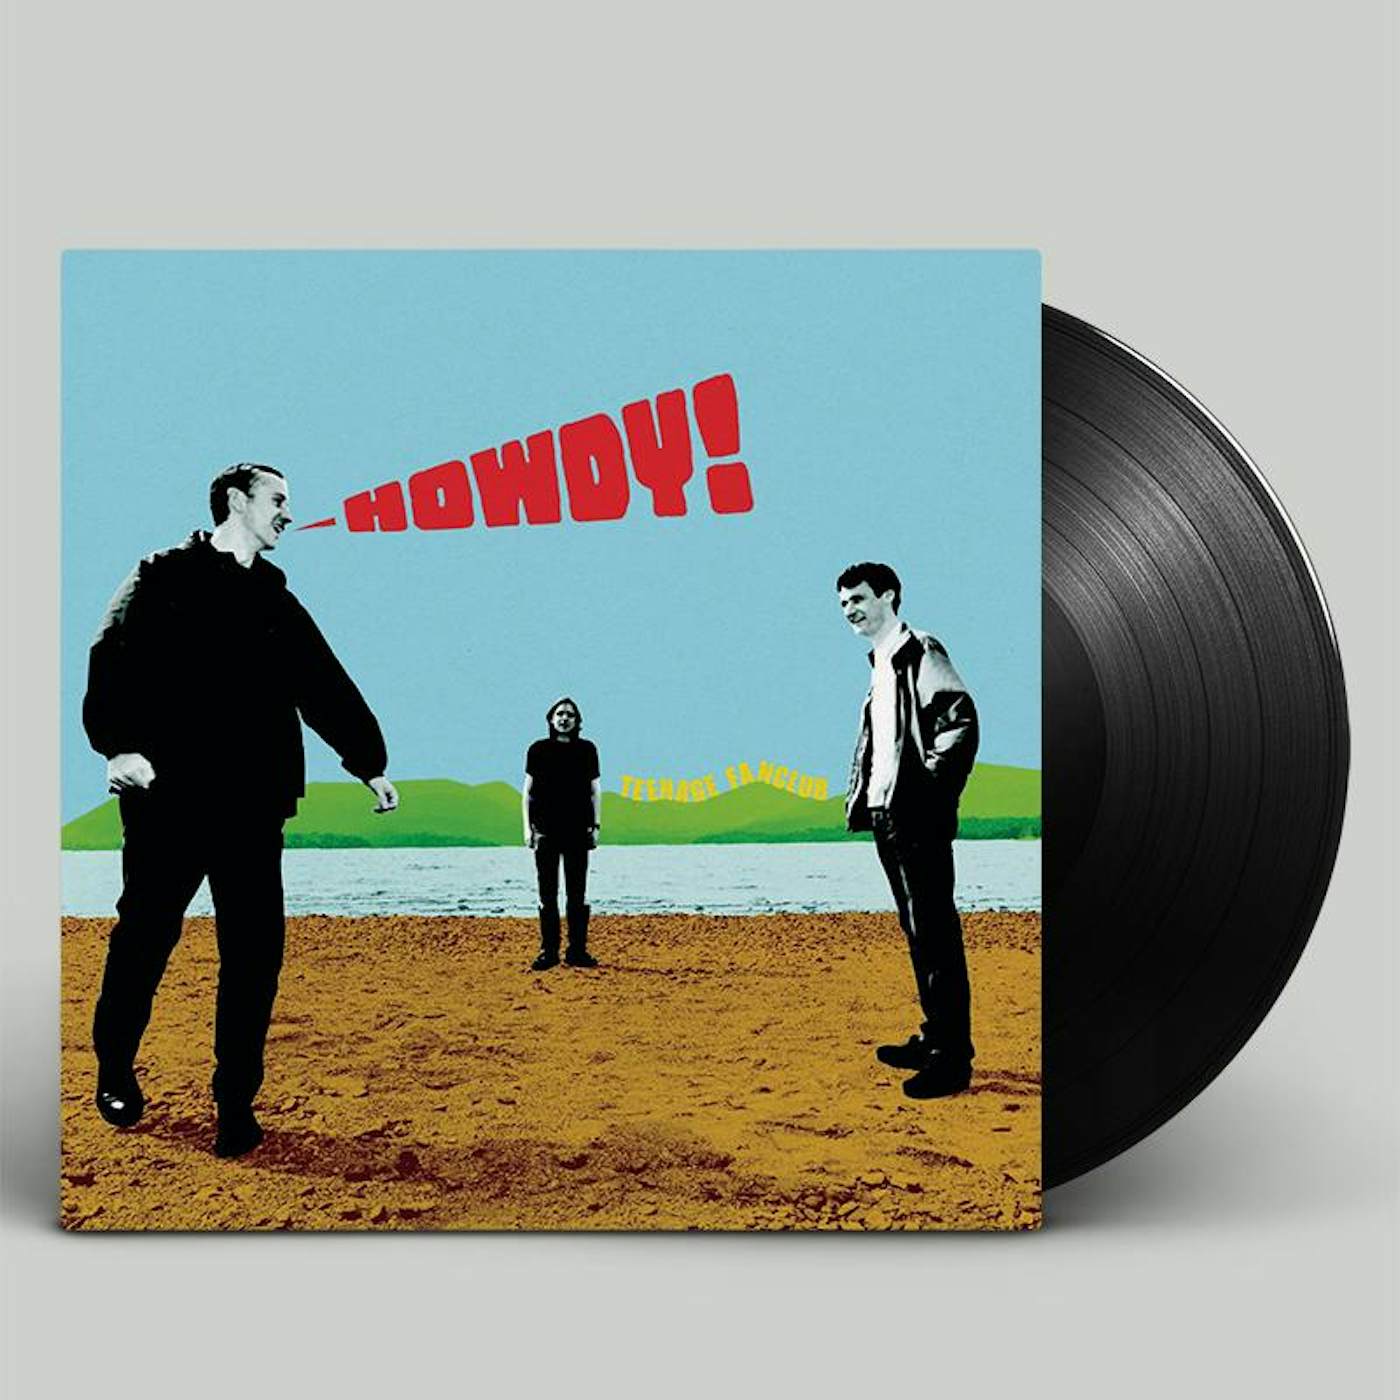 Teenage Fanclub HOWDY! - LP + 7" (Vinyl)